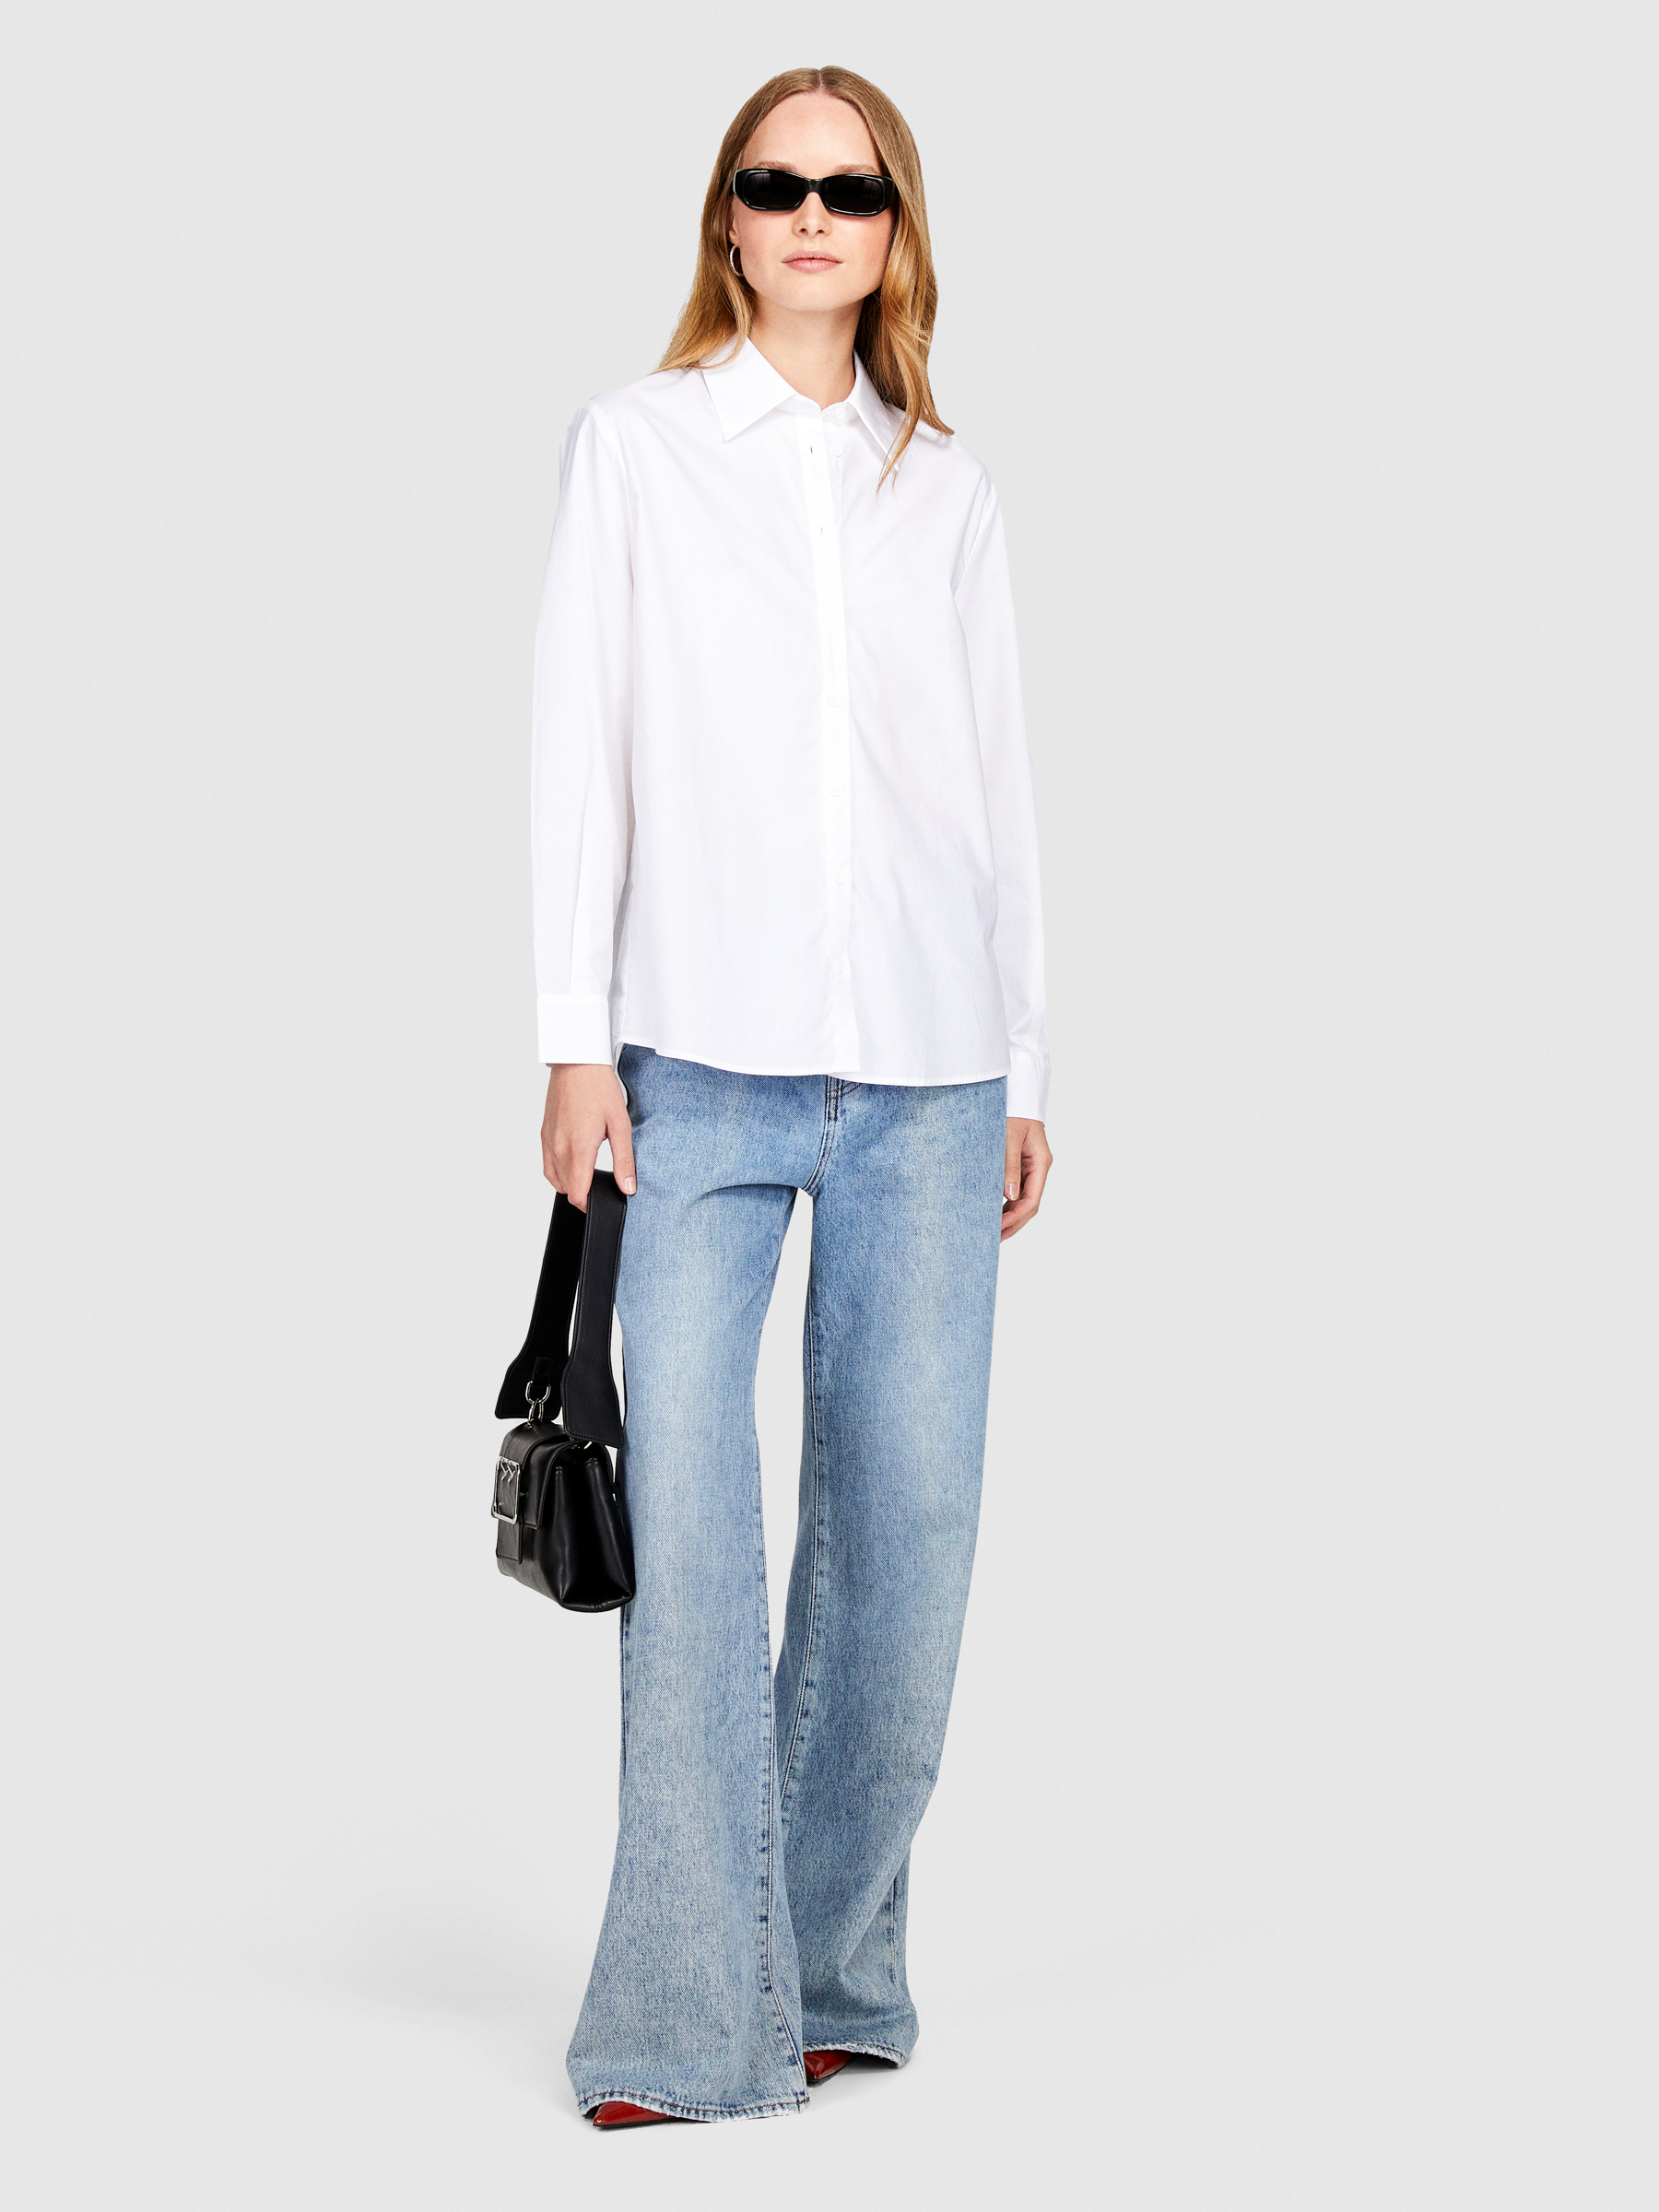 Sisley - Comfort Fit Shirt, Woman, White, Size: S